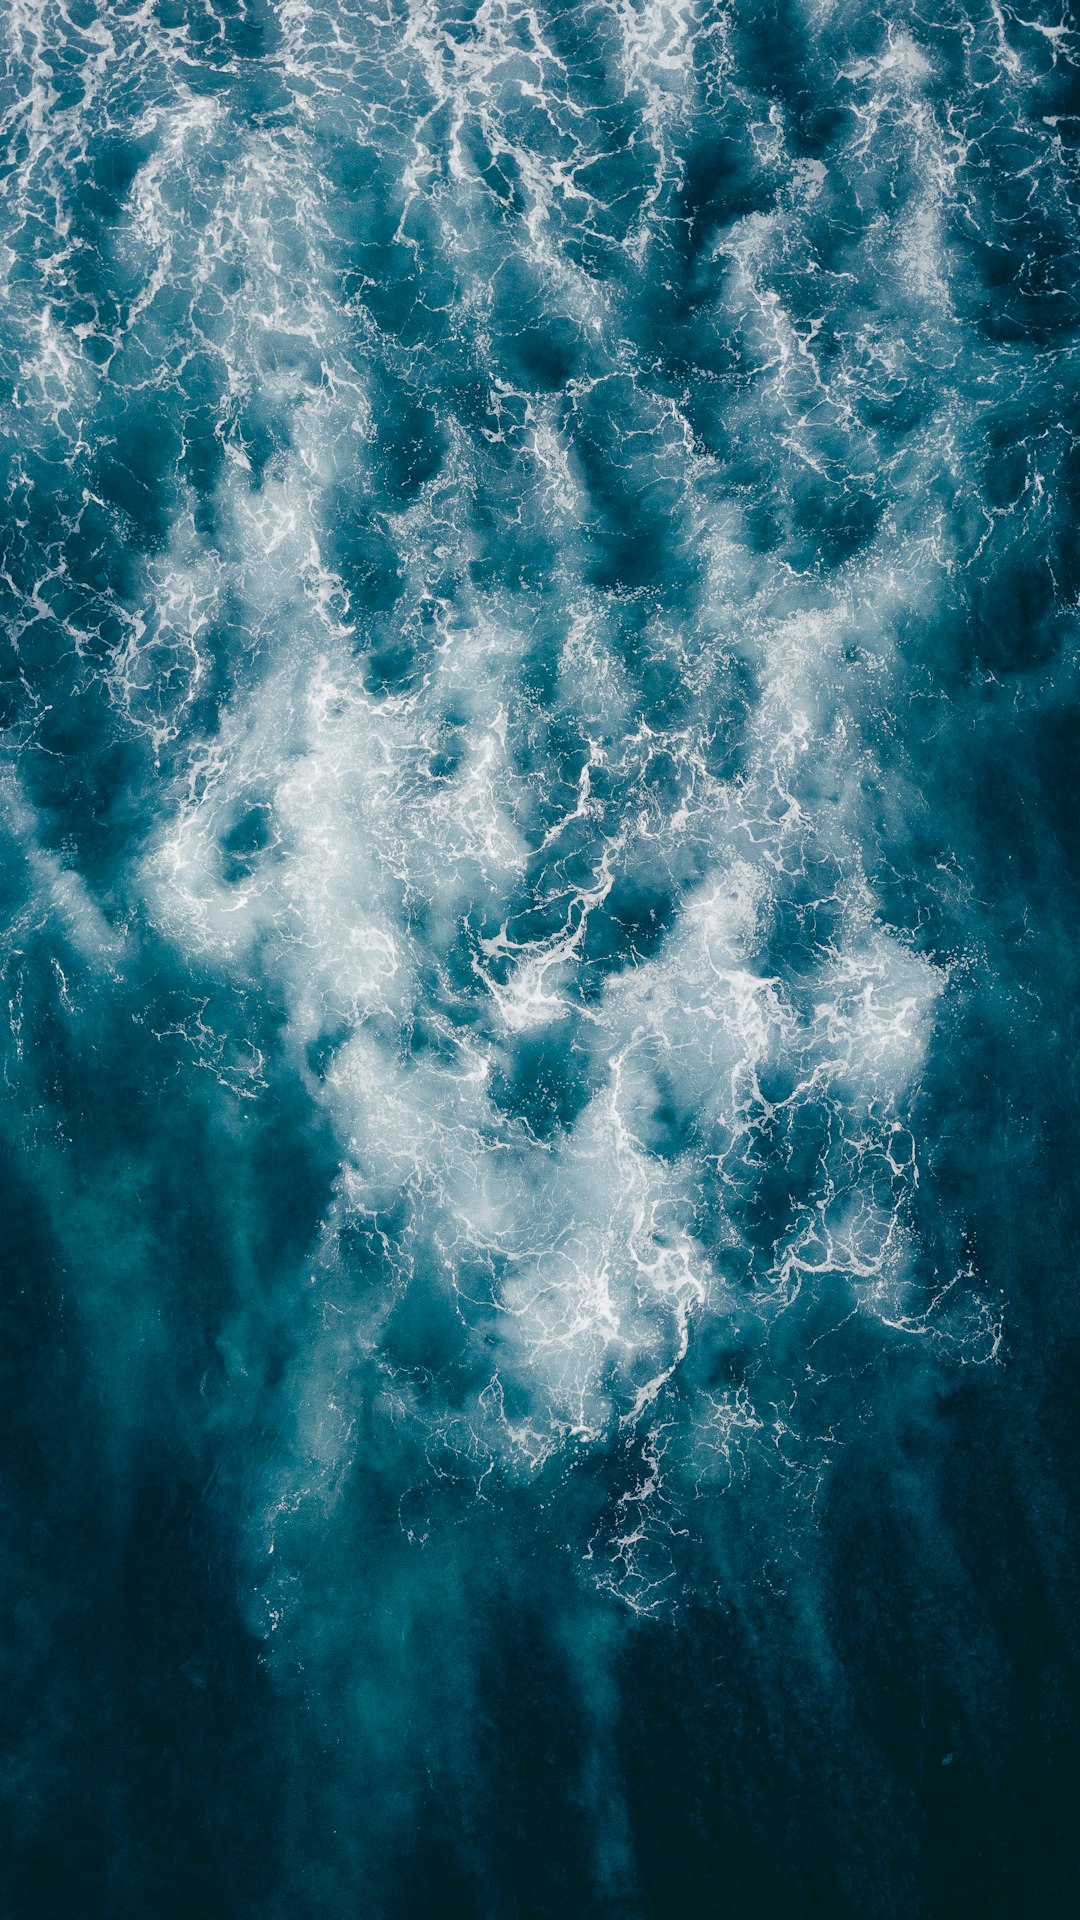 blue and white water splash